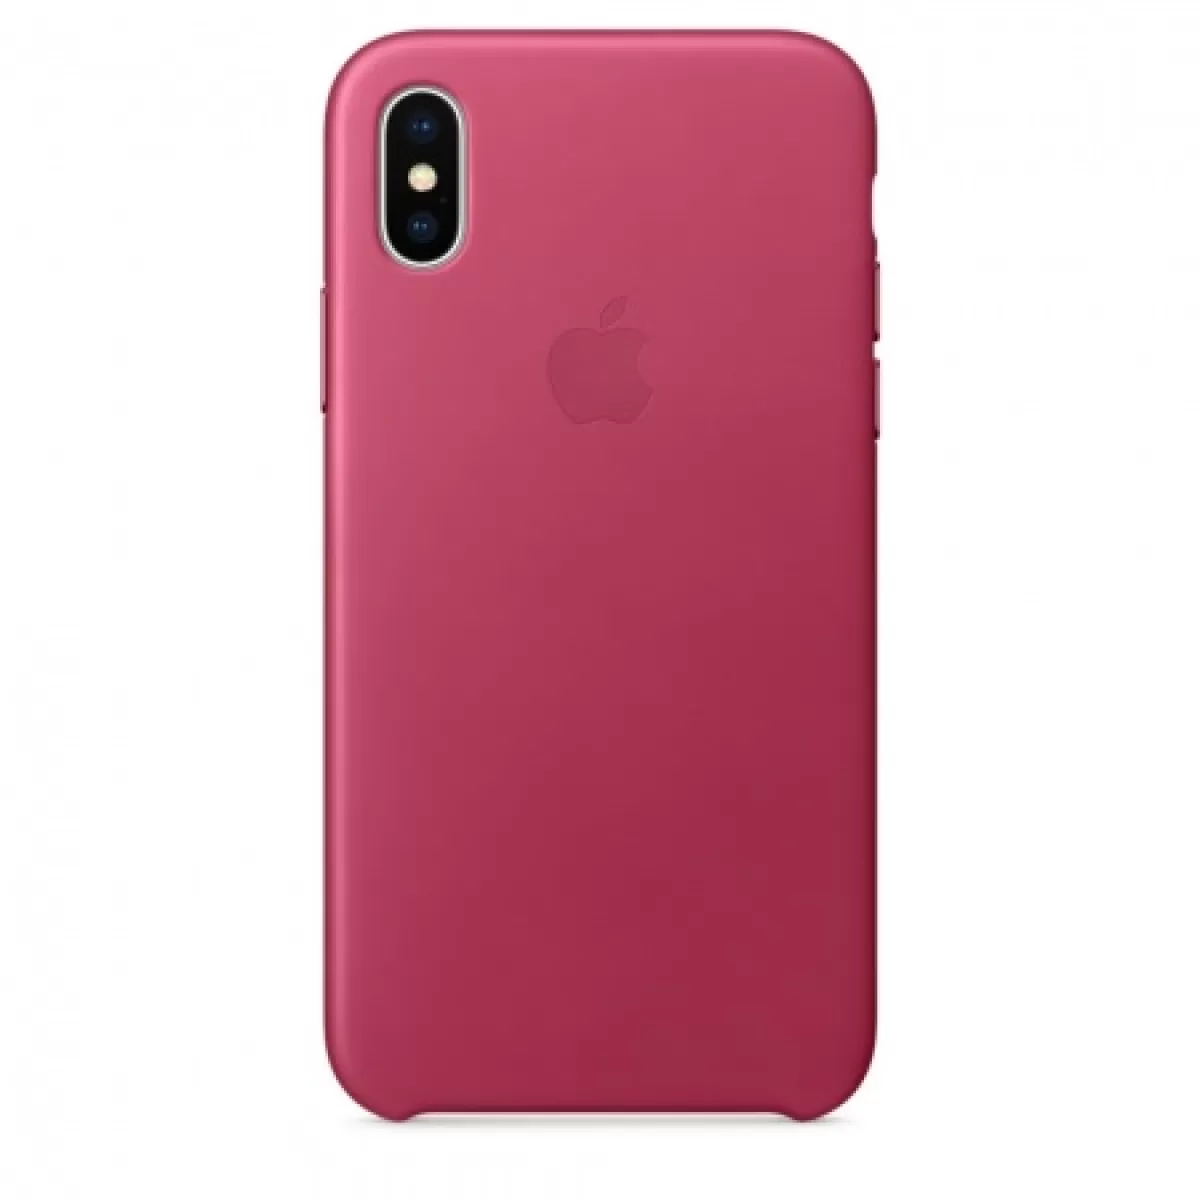 Apple iPhone X Leather Case Pink Fuchsia